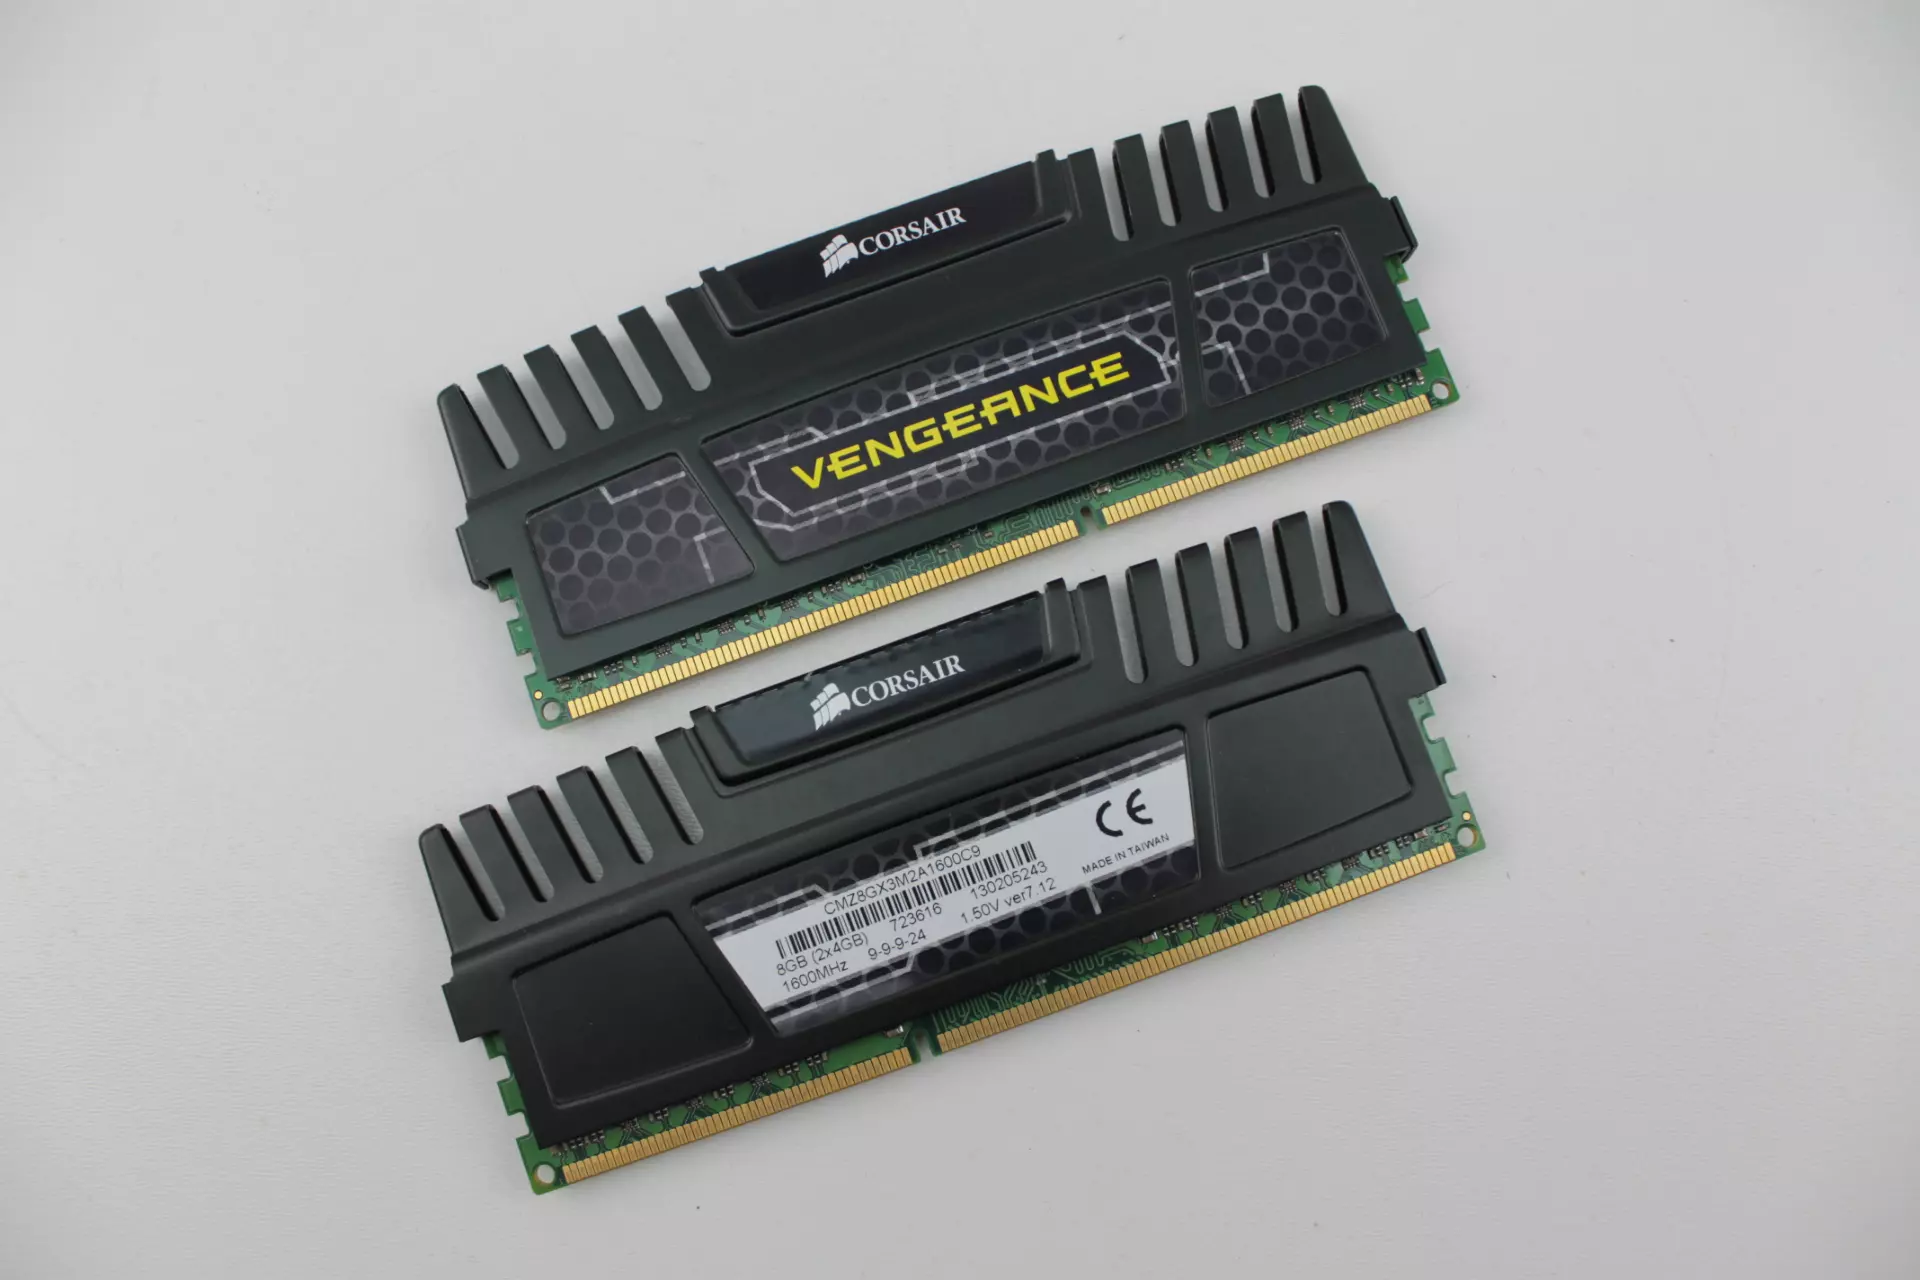 Corsair Vengeance DDR3 8GB 1600MHz 2x4GB